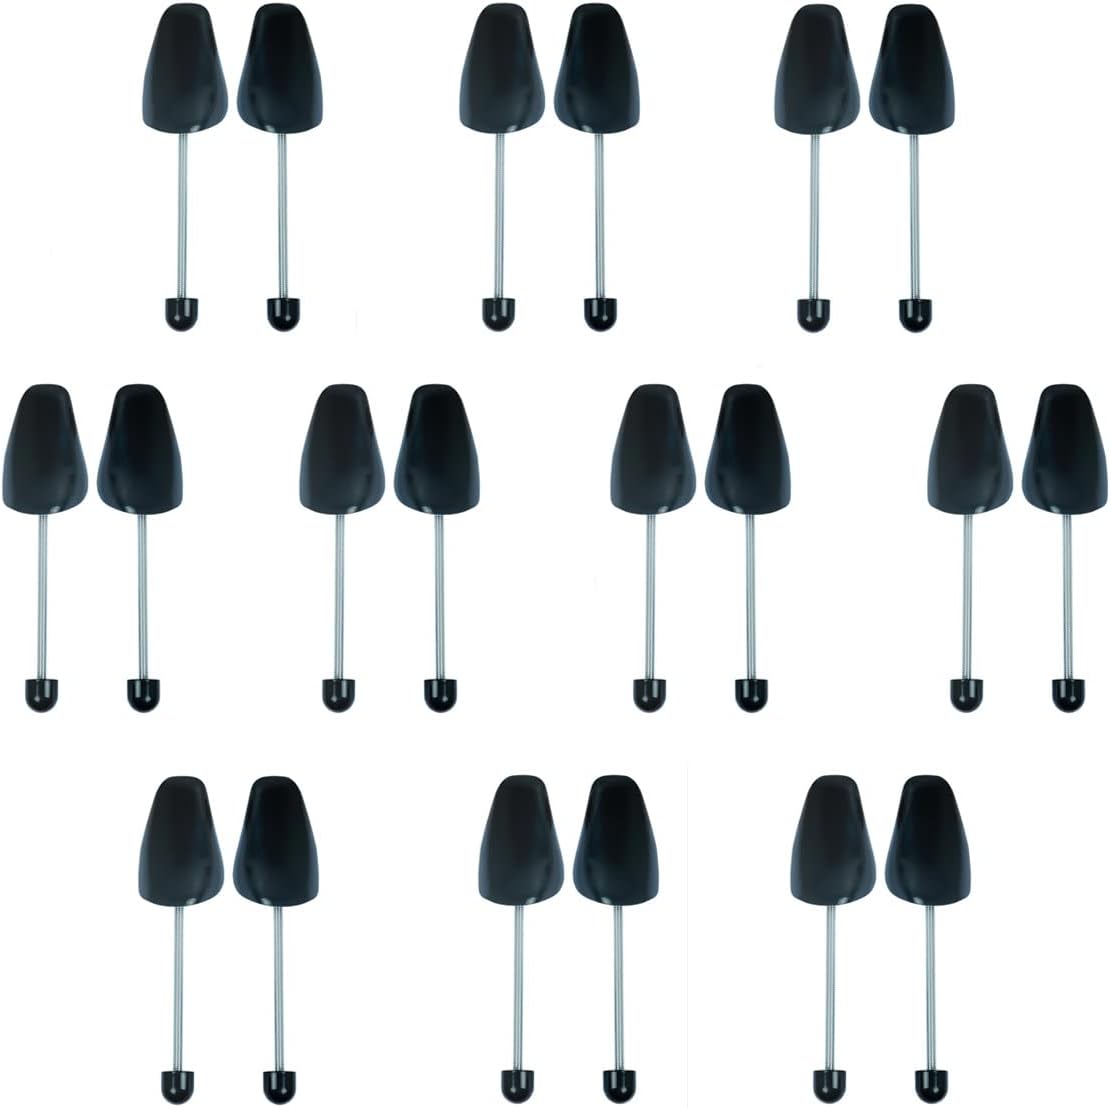 Ahberxig 10 Pairs Plastic Shoe Trees for Men (Black)